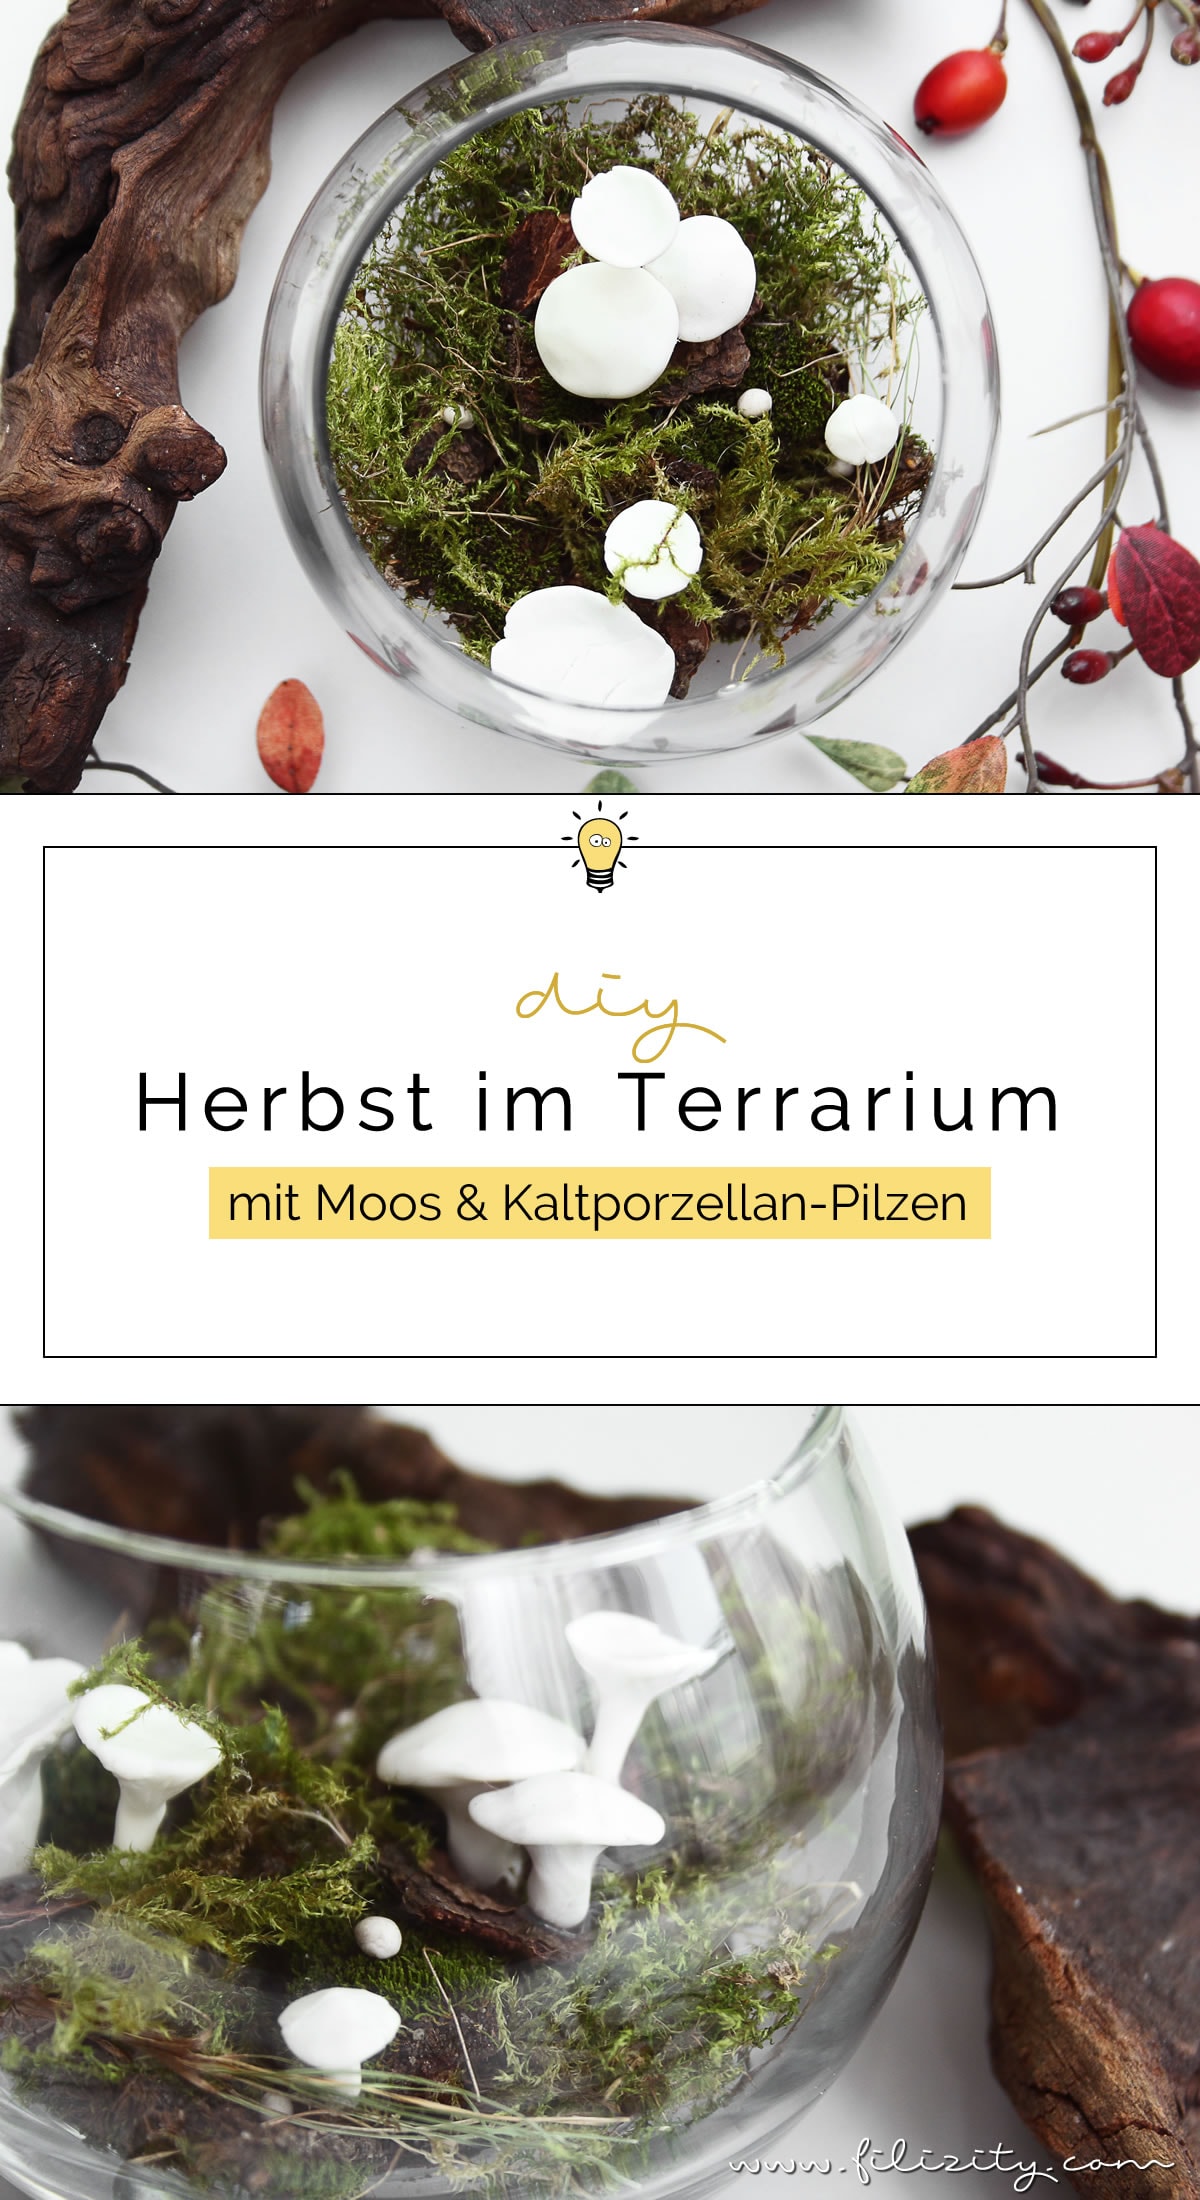 DIY Herbst-Deko mit Kaltporzellan-Pilzen #kaltporzellan #pilz #herbst #deko